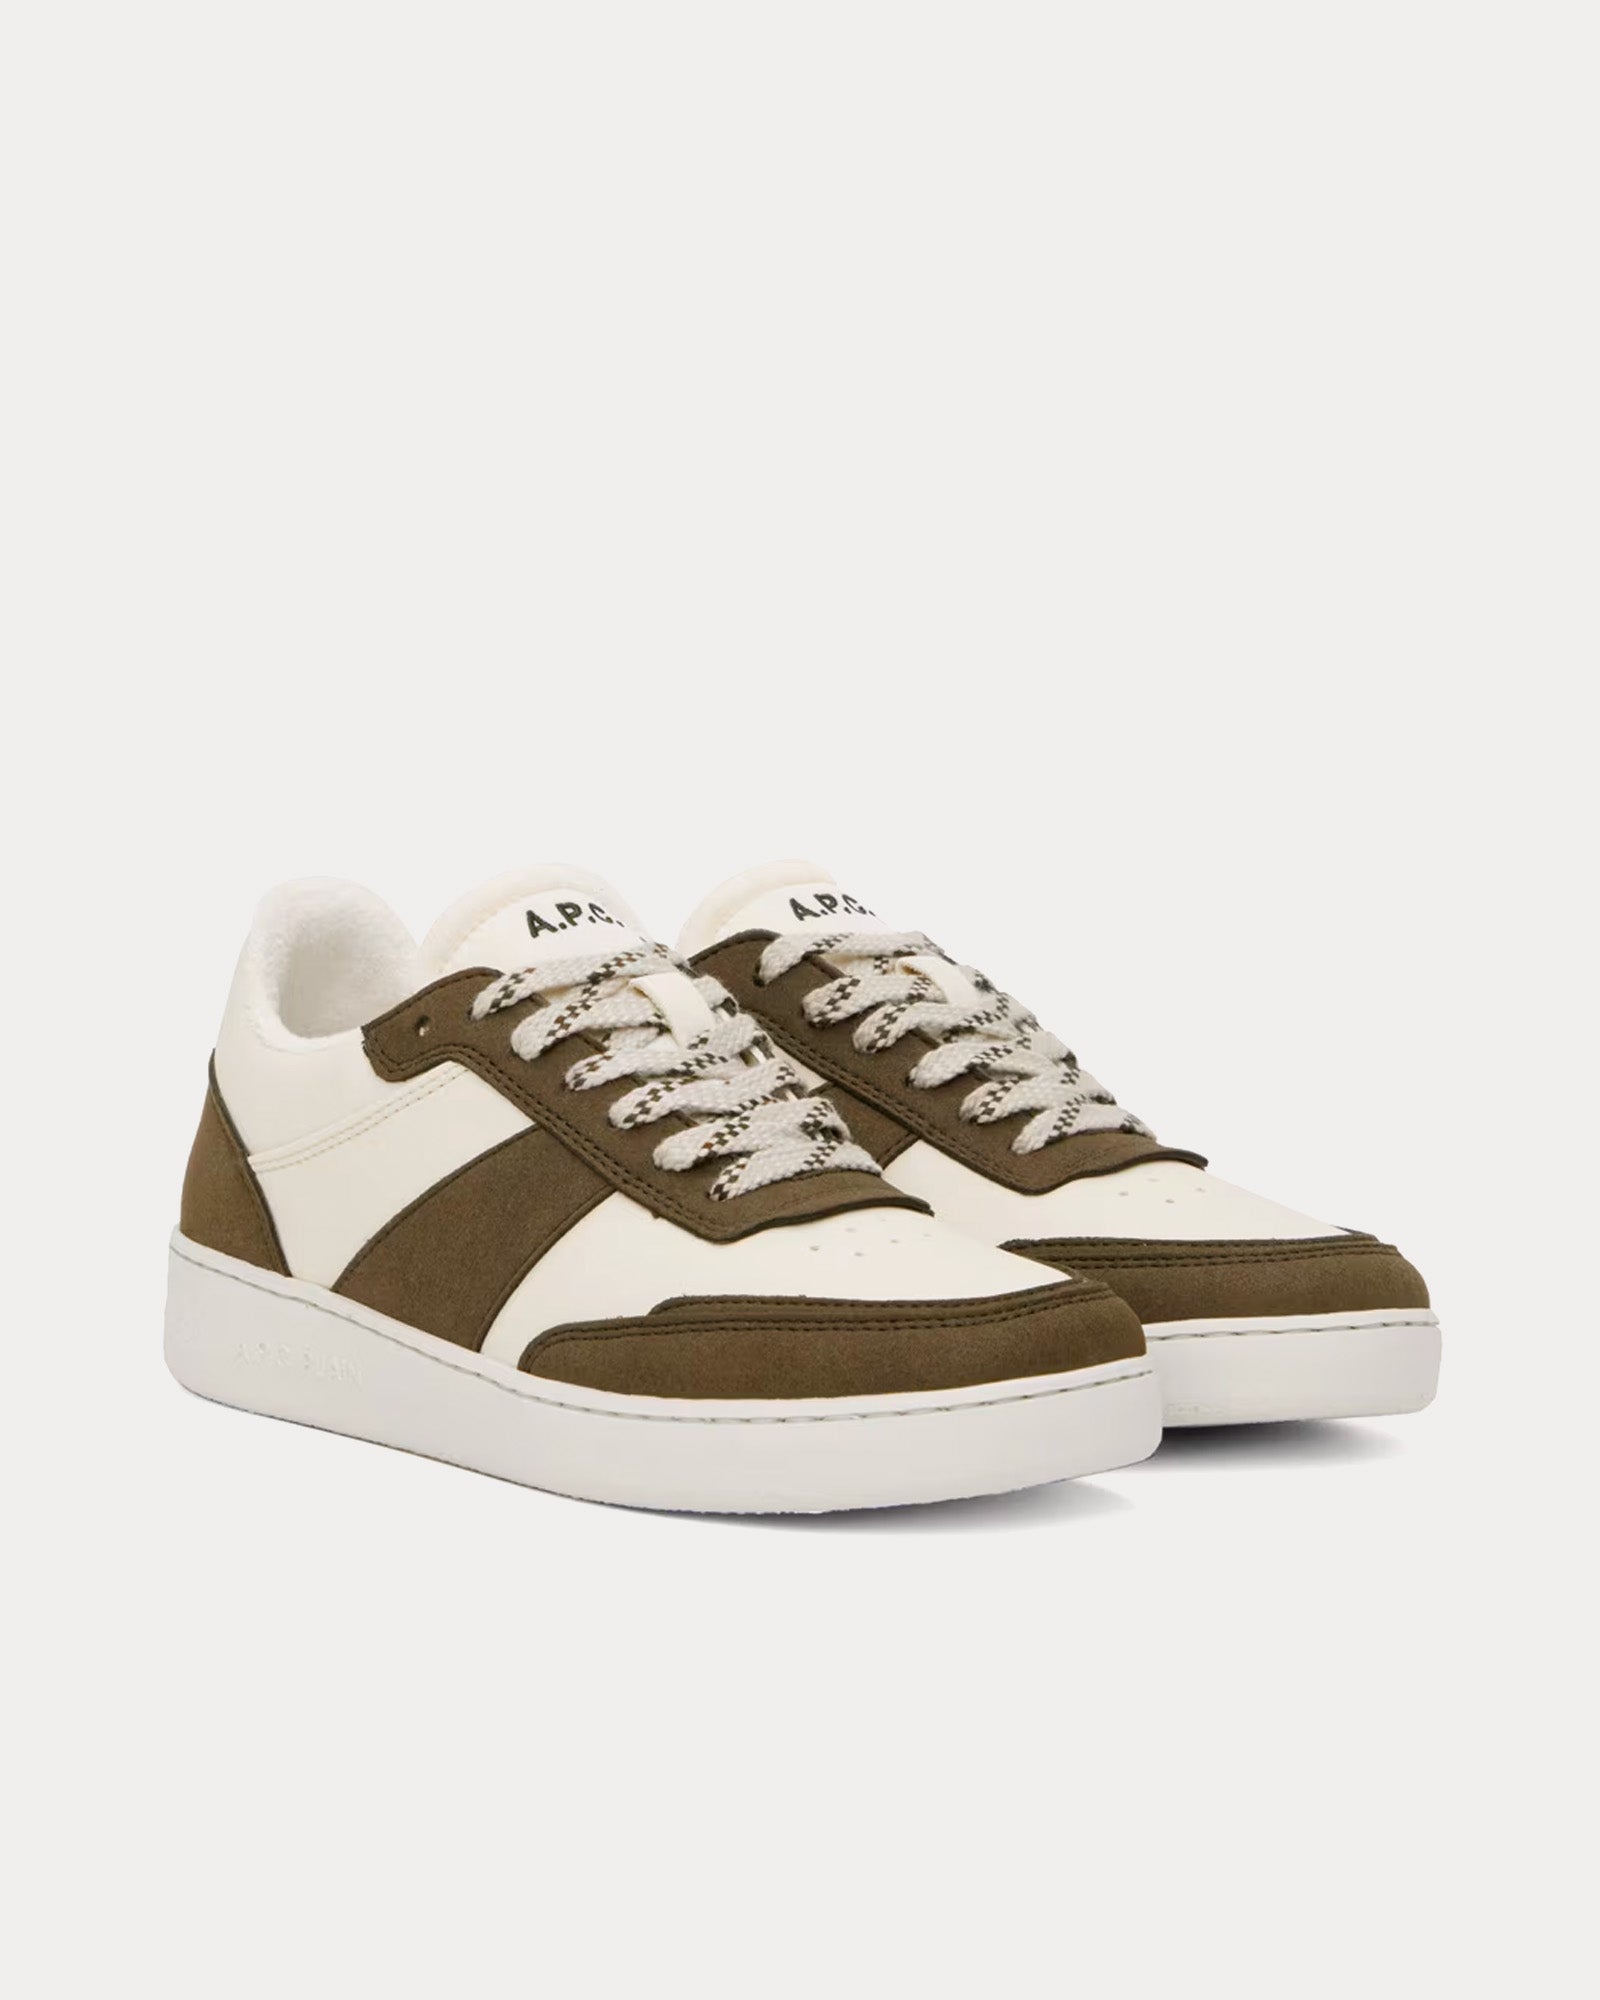 A.P.C. - Plain Khaki / Off White Low Top Sneakers